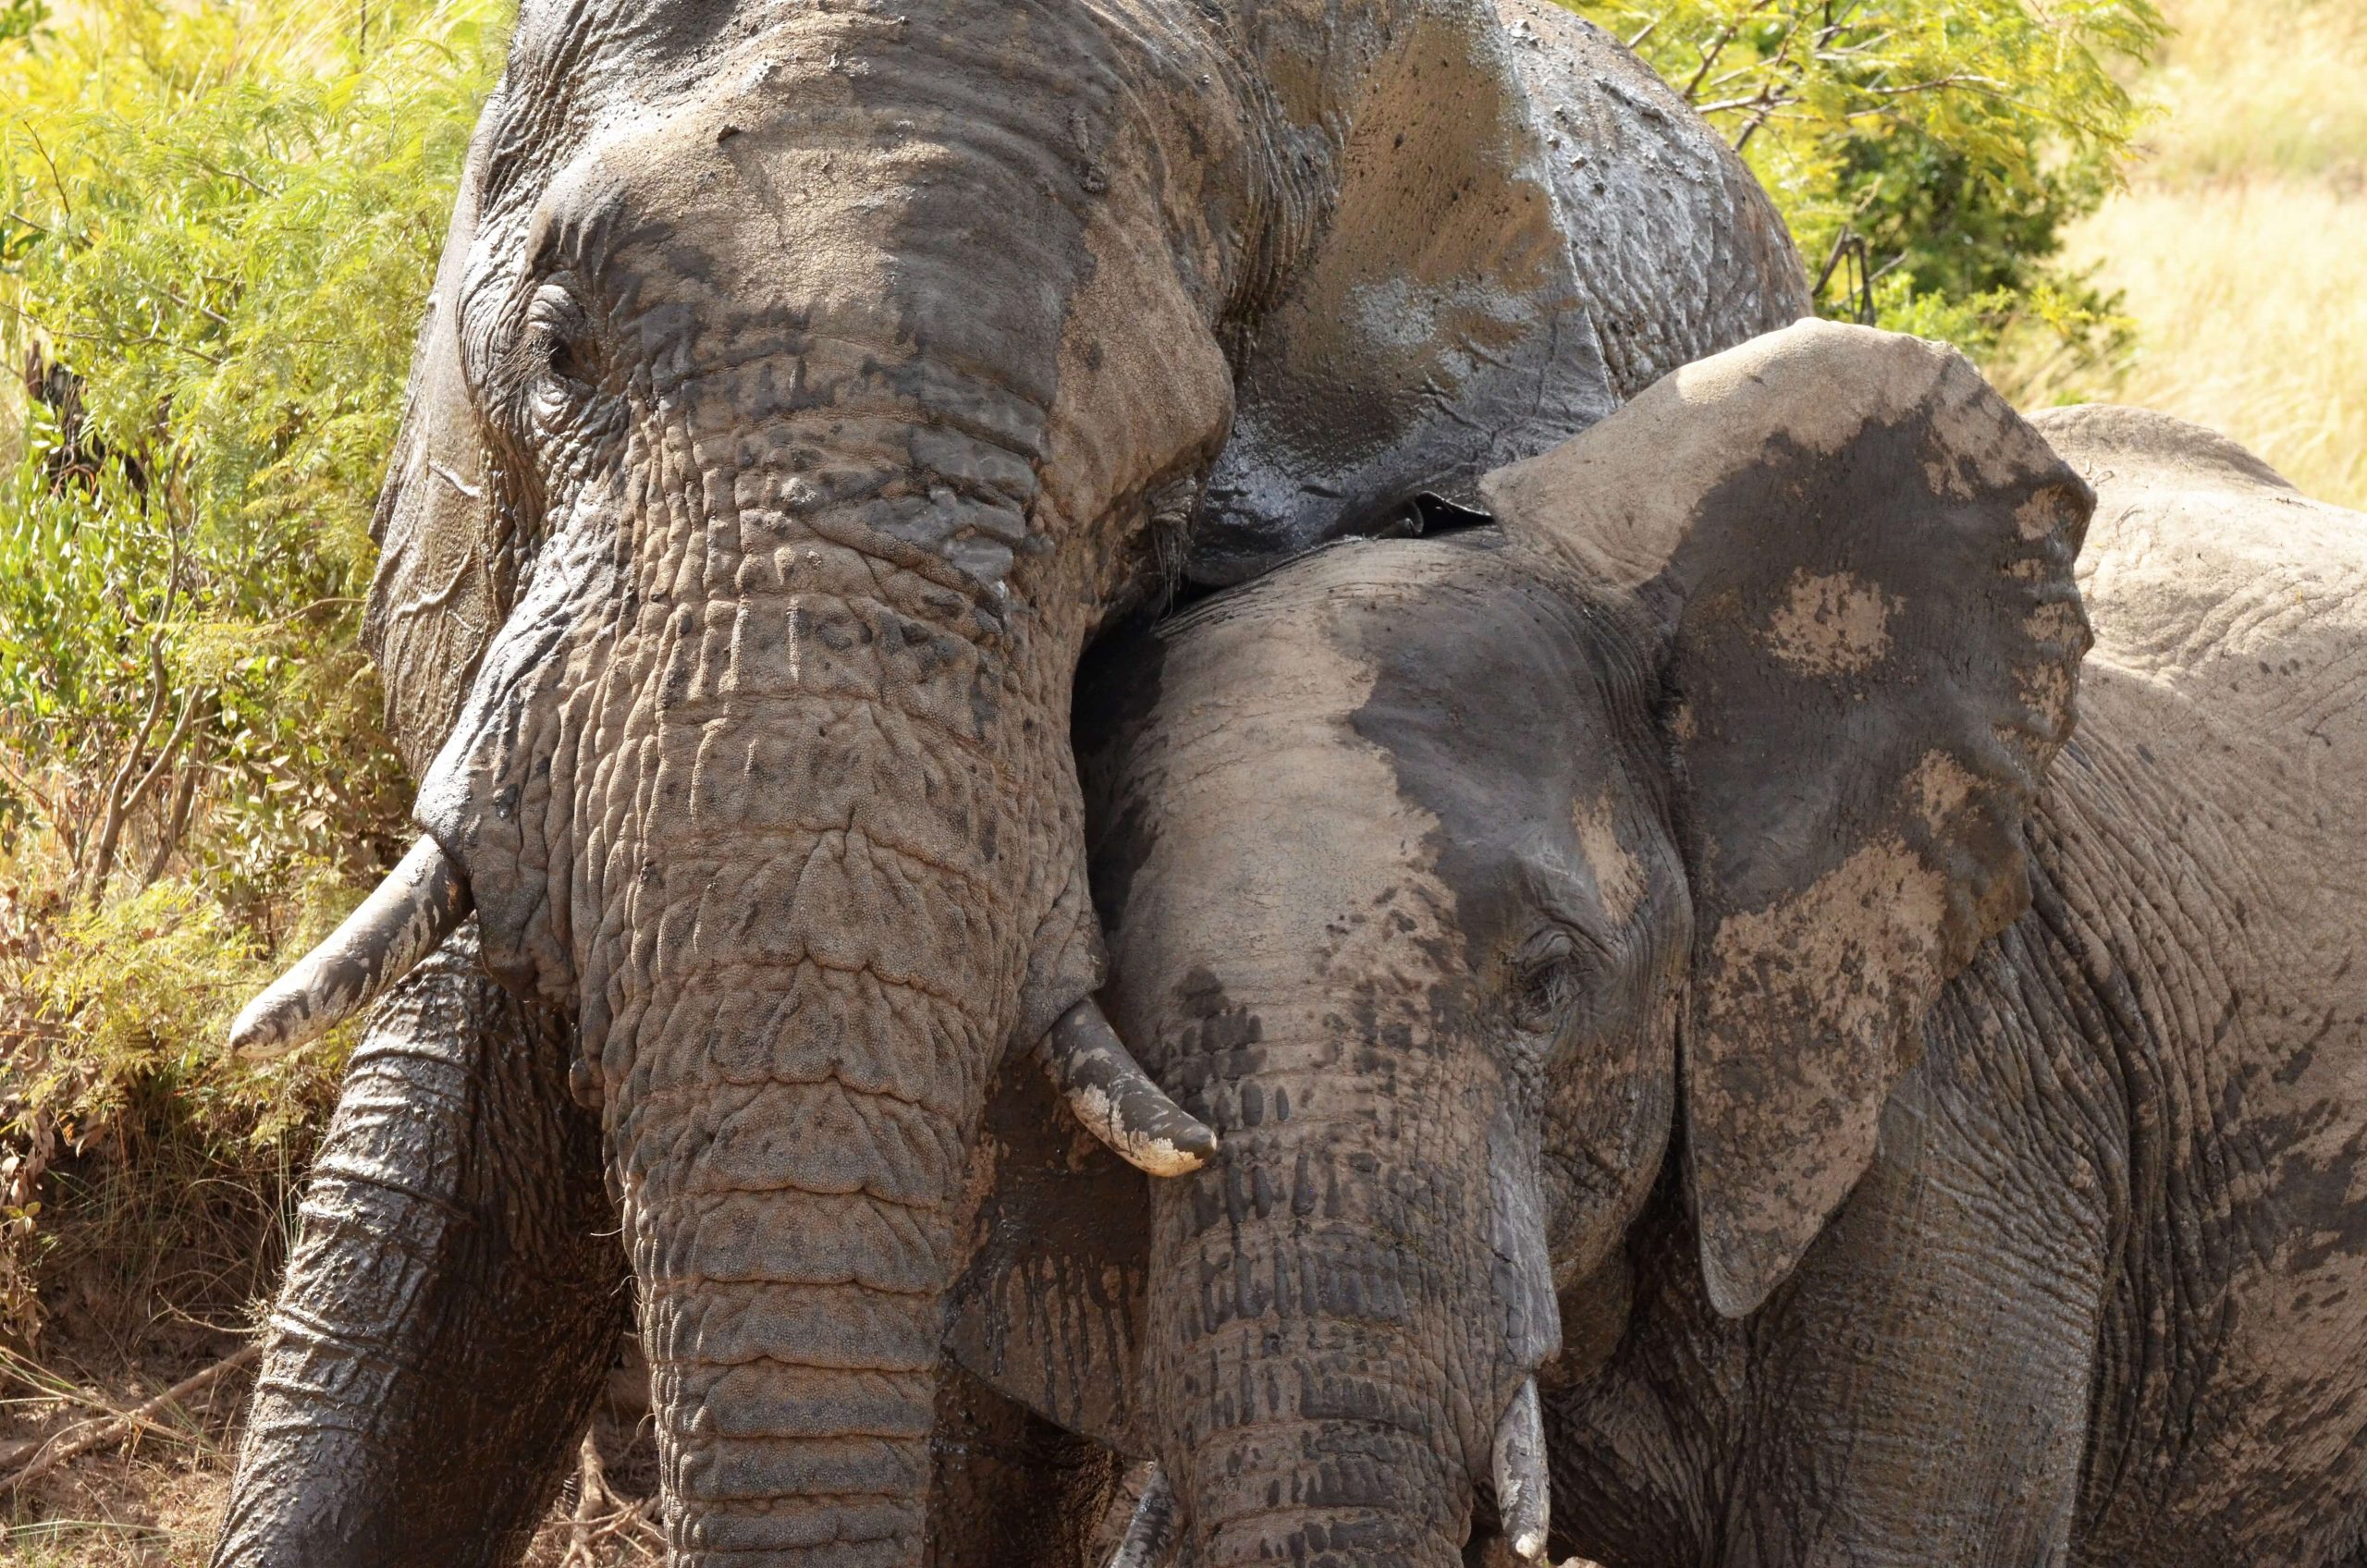 Cuddling elephants